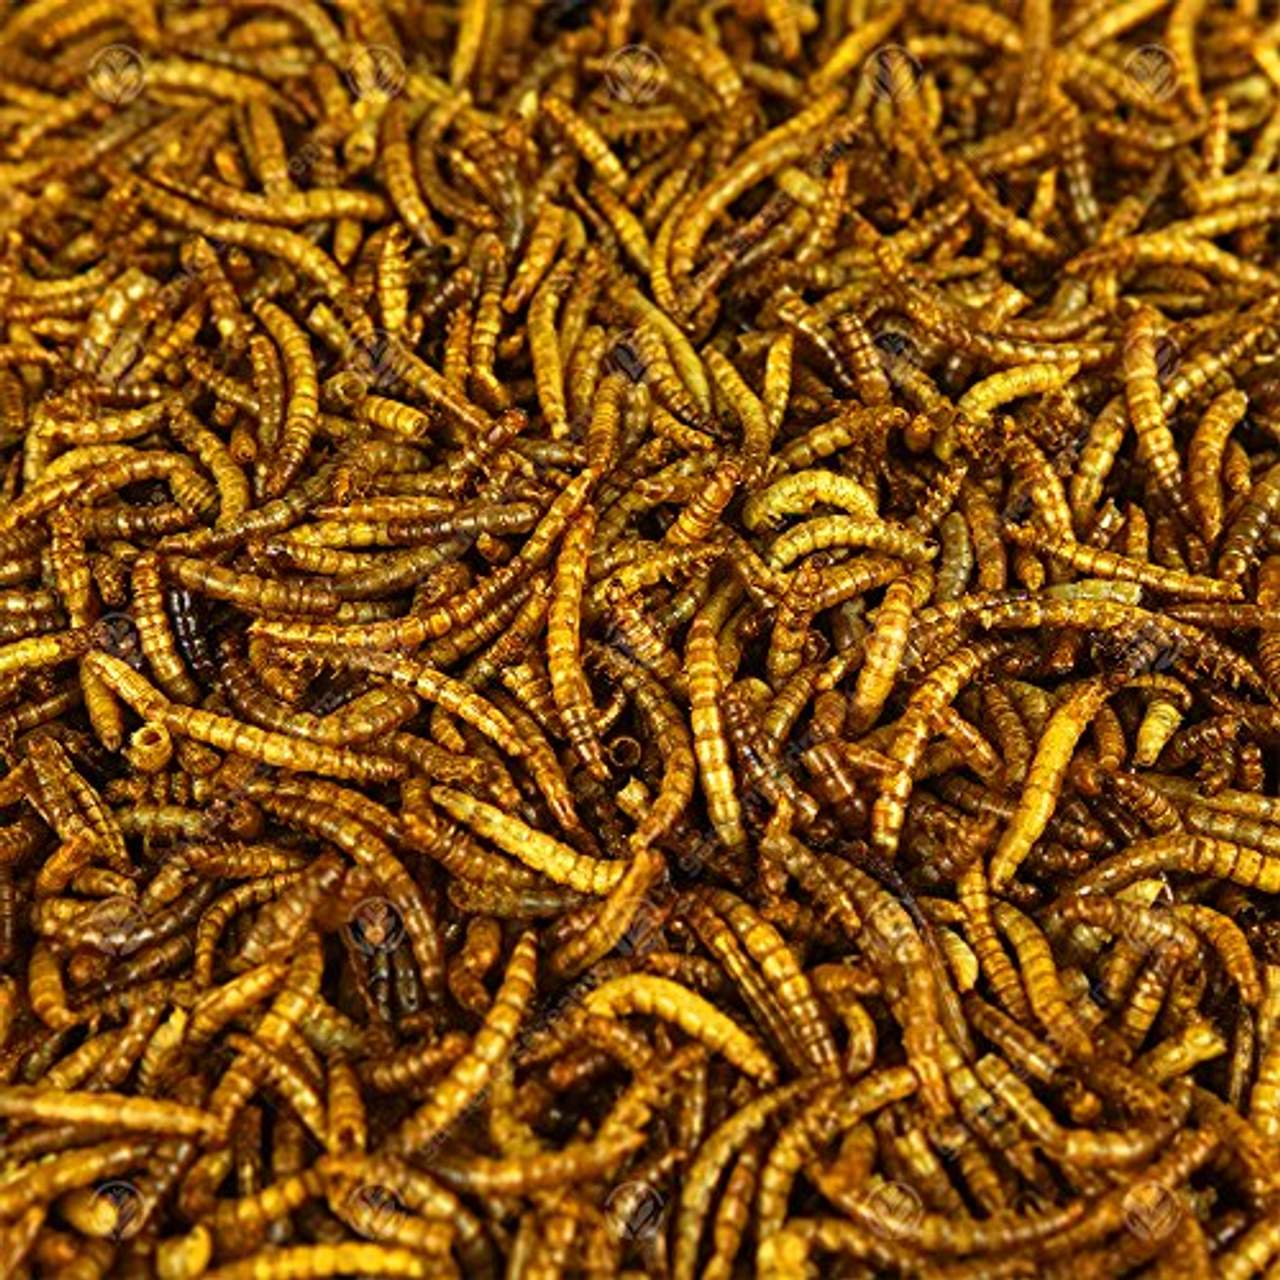 Mealworms Mehlwürmer Getrocknet